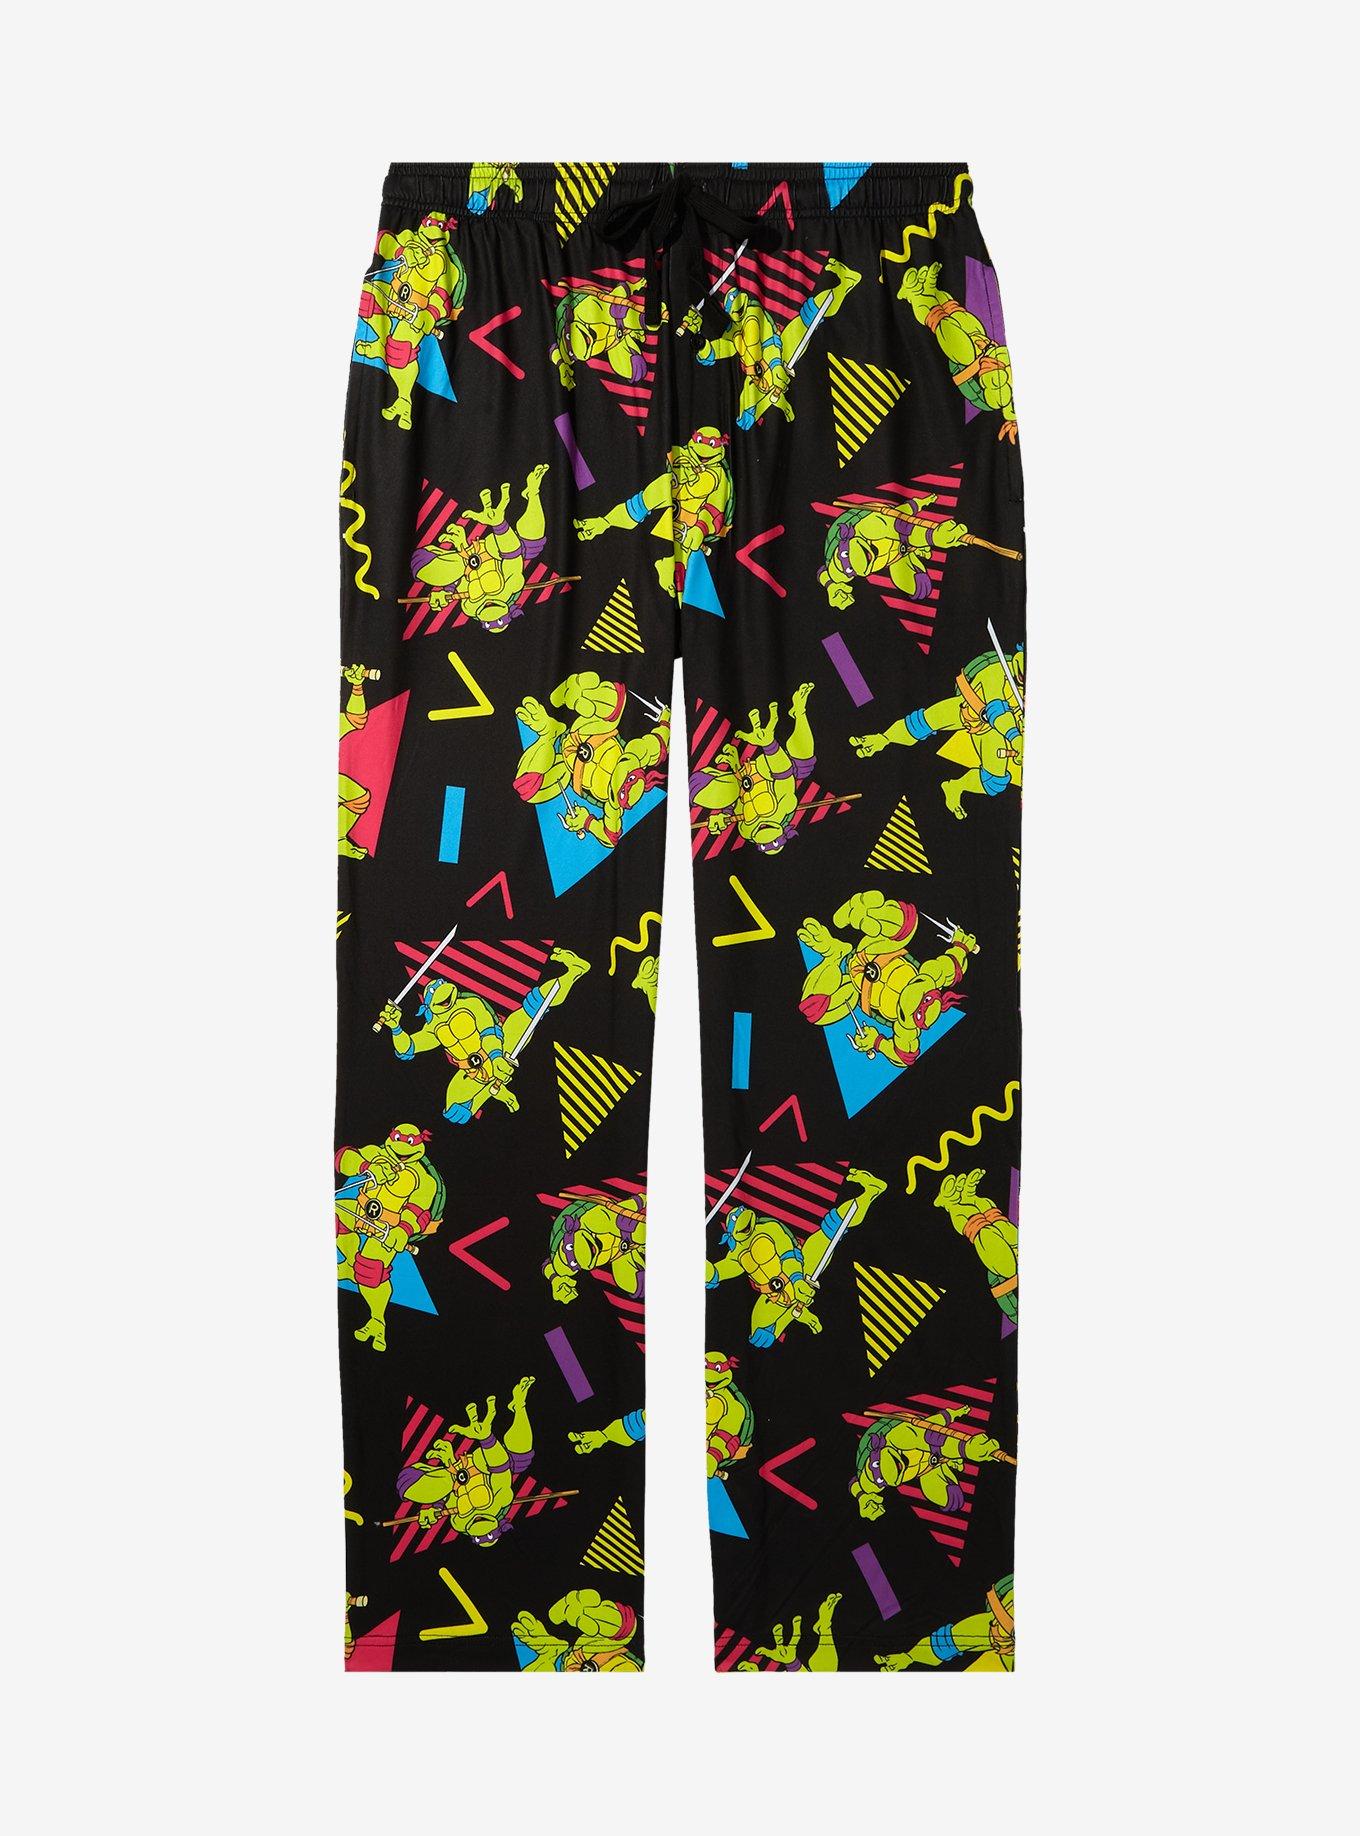 Nickelodeon Men's Teenage Mutant Ninja Turtles TMNT Allover Loungewear  Sleep Bottoms Pajama Pants